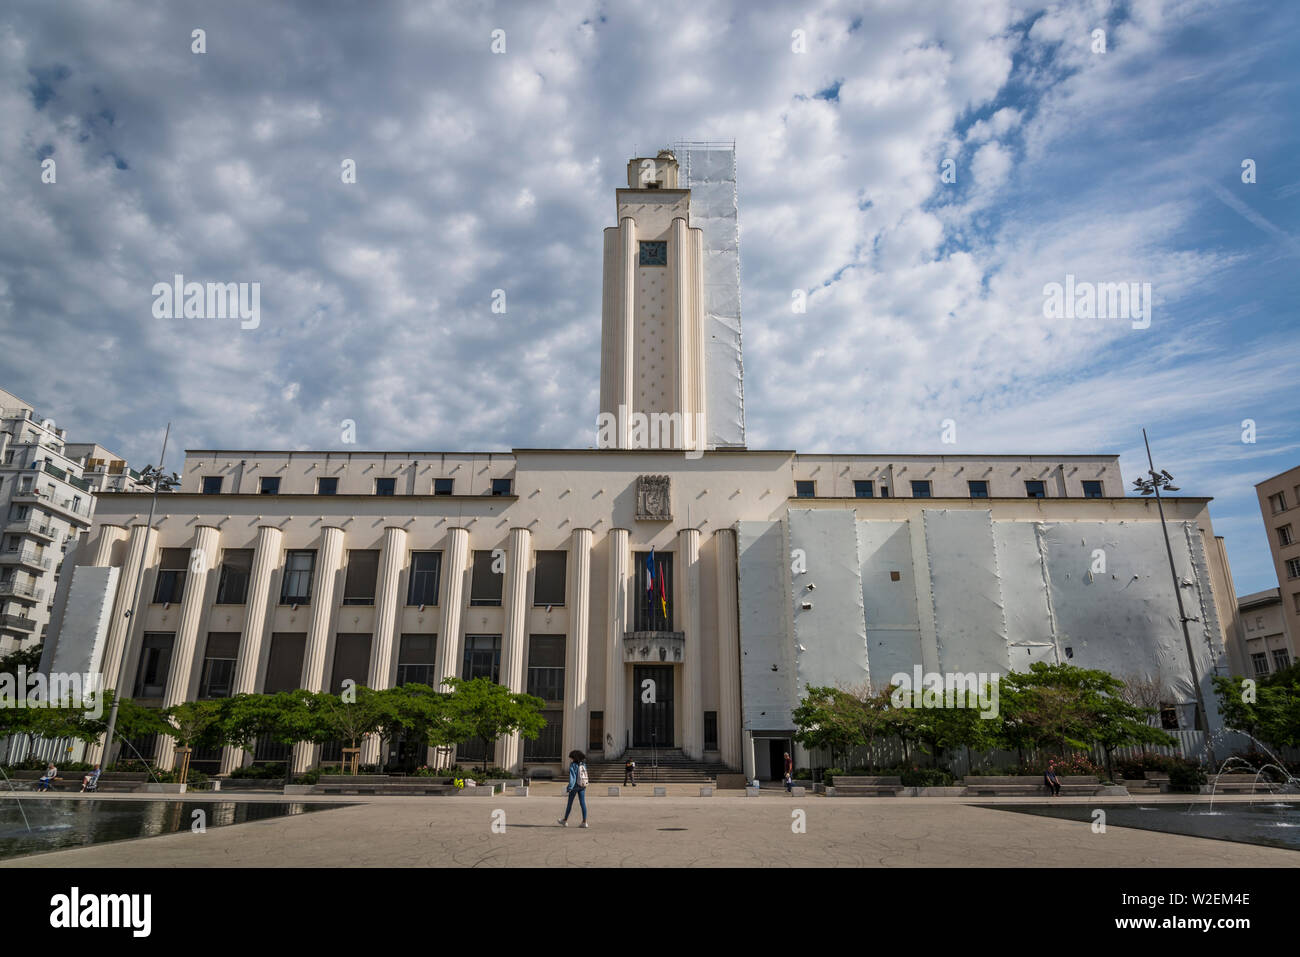 The City Hall at the Place Lazare Goujon, Villeurbanne, Lyon, France Stock Photo